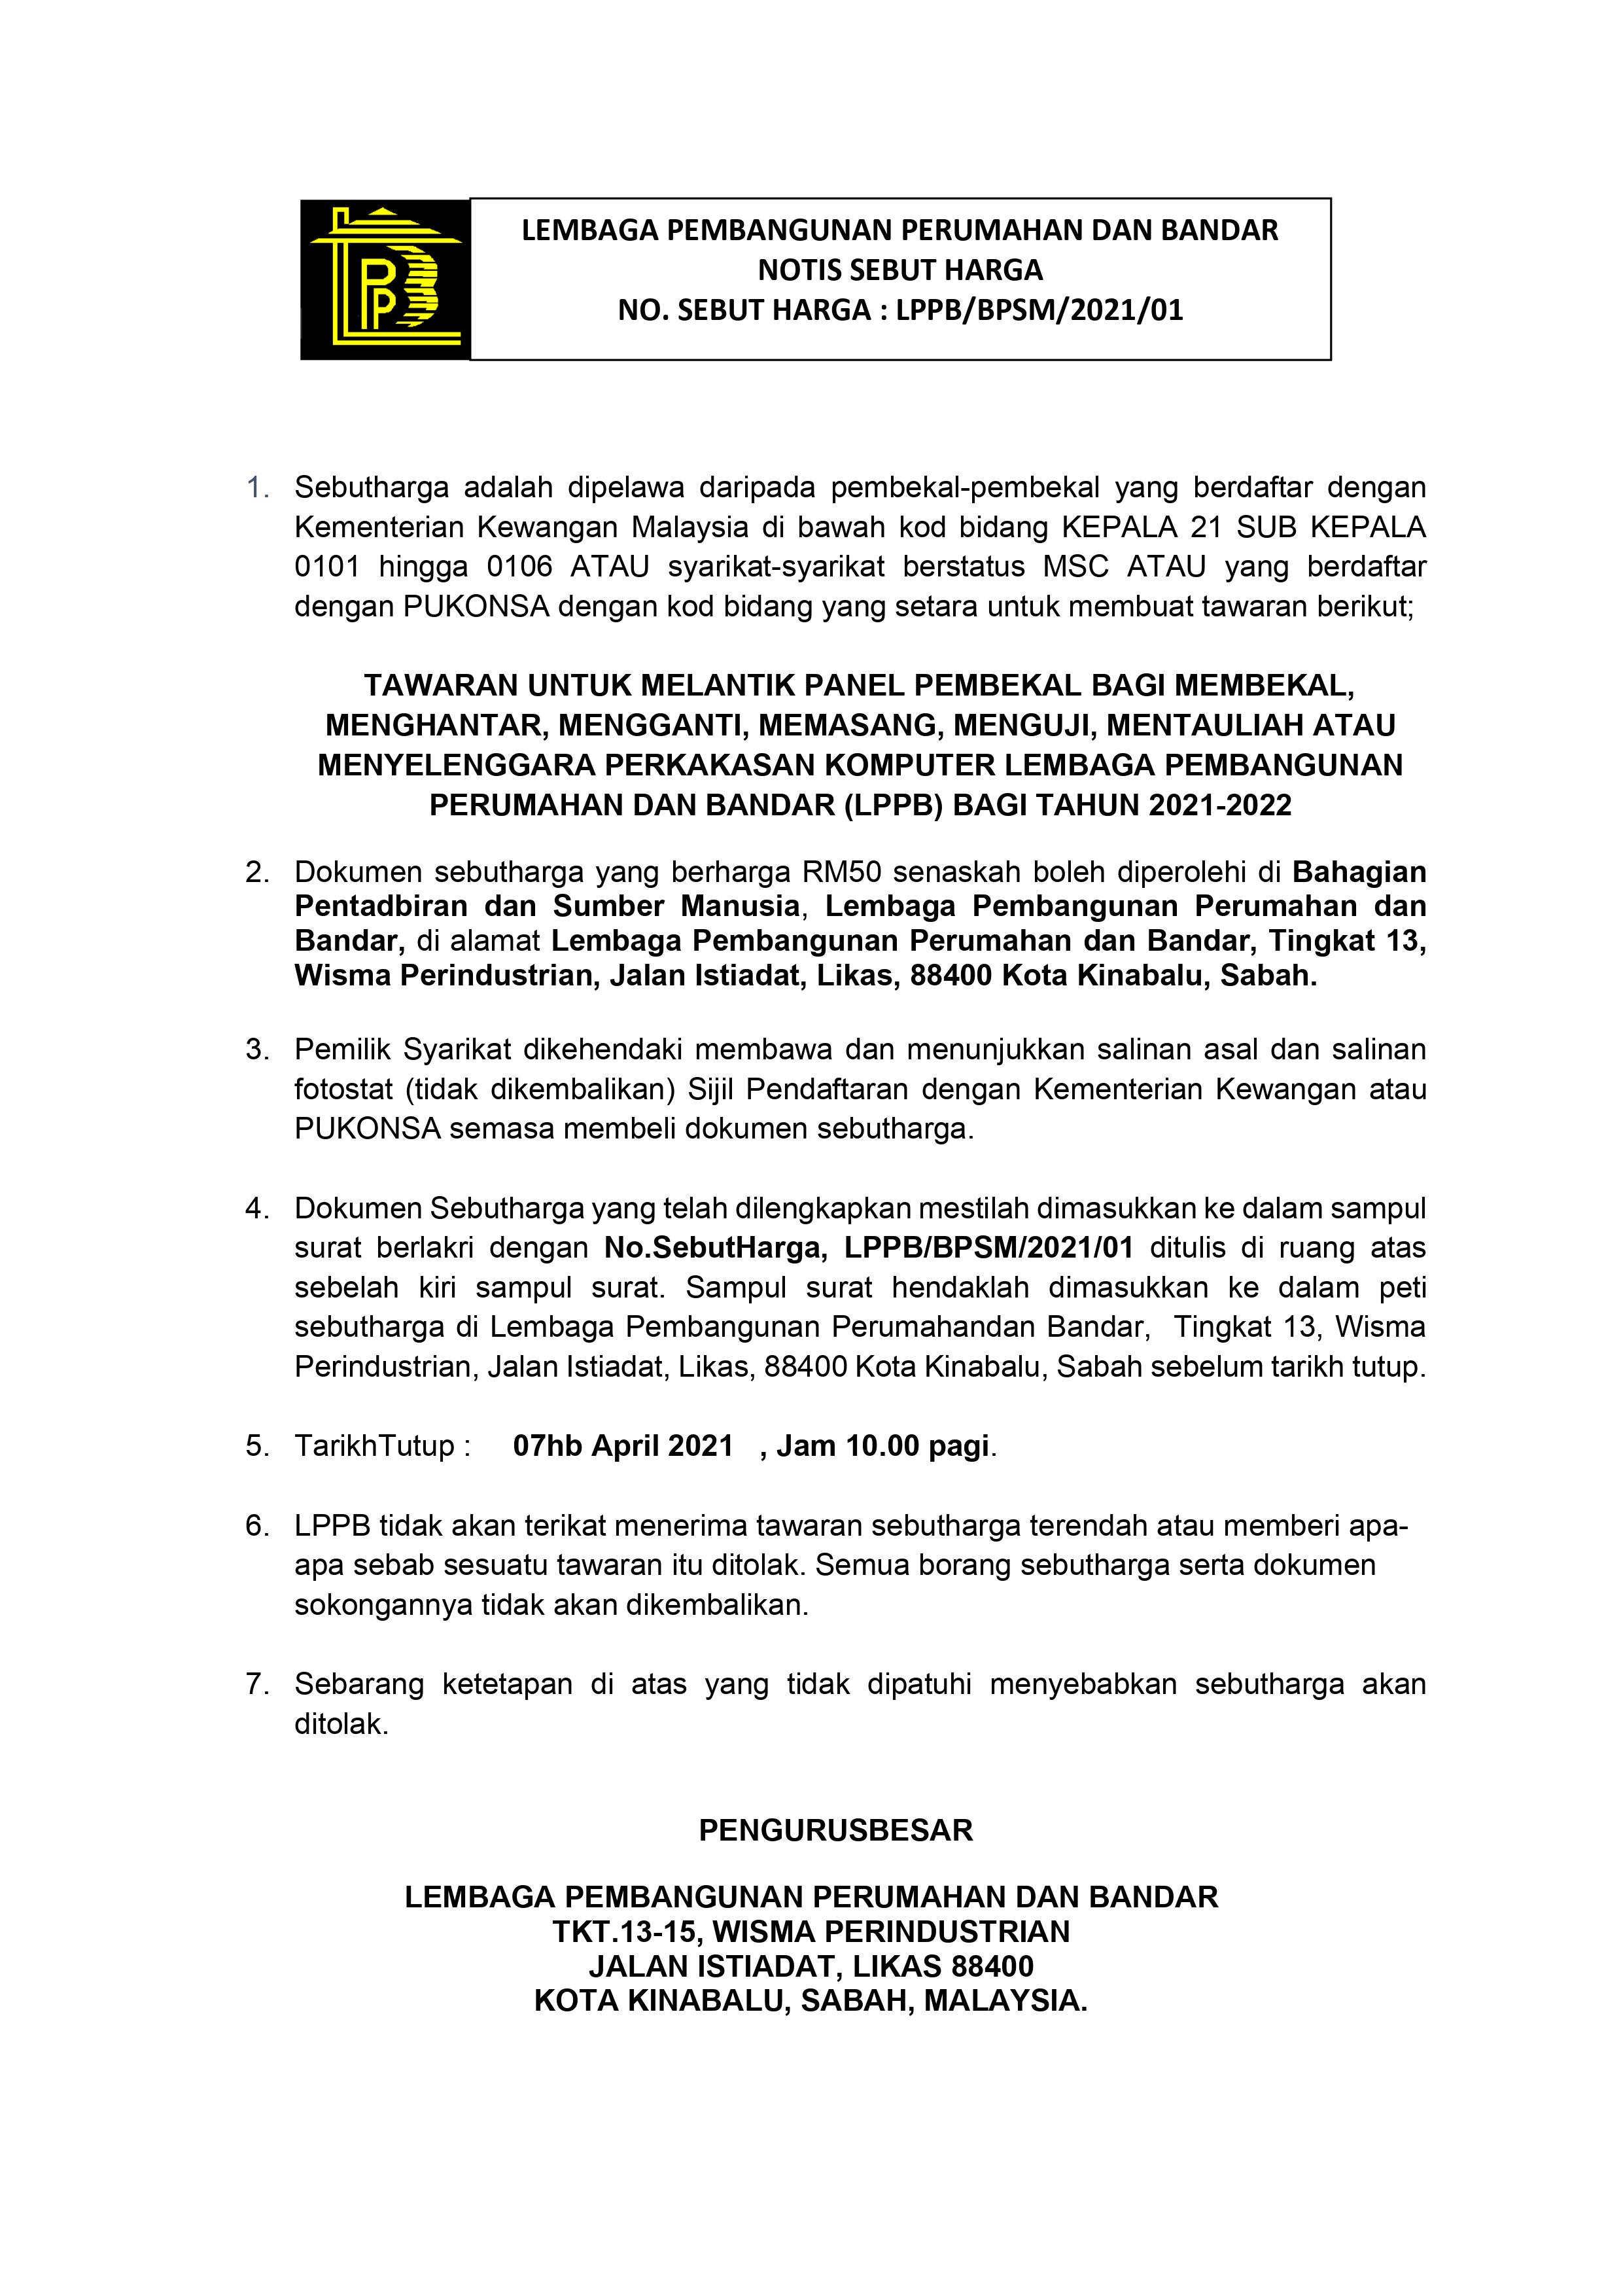 Lembaga Pembangunan Perumahan Dan Bandar Kota Kinabalu Malaysia